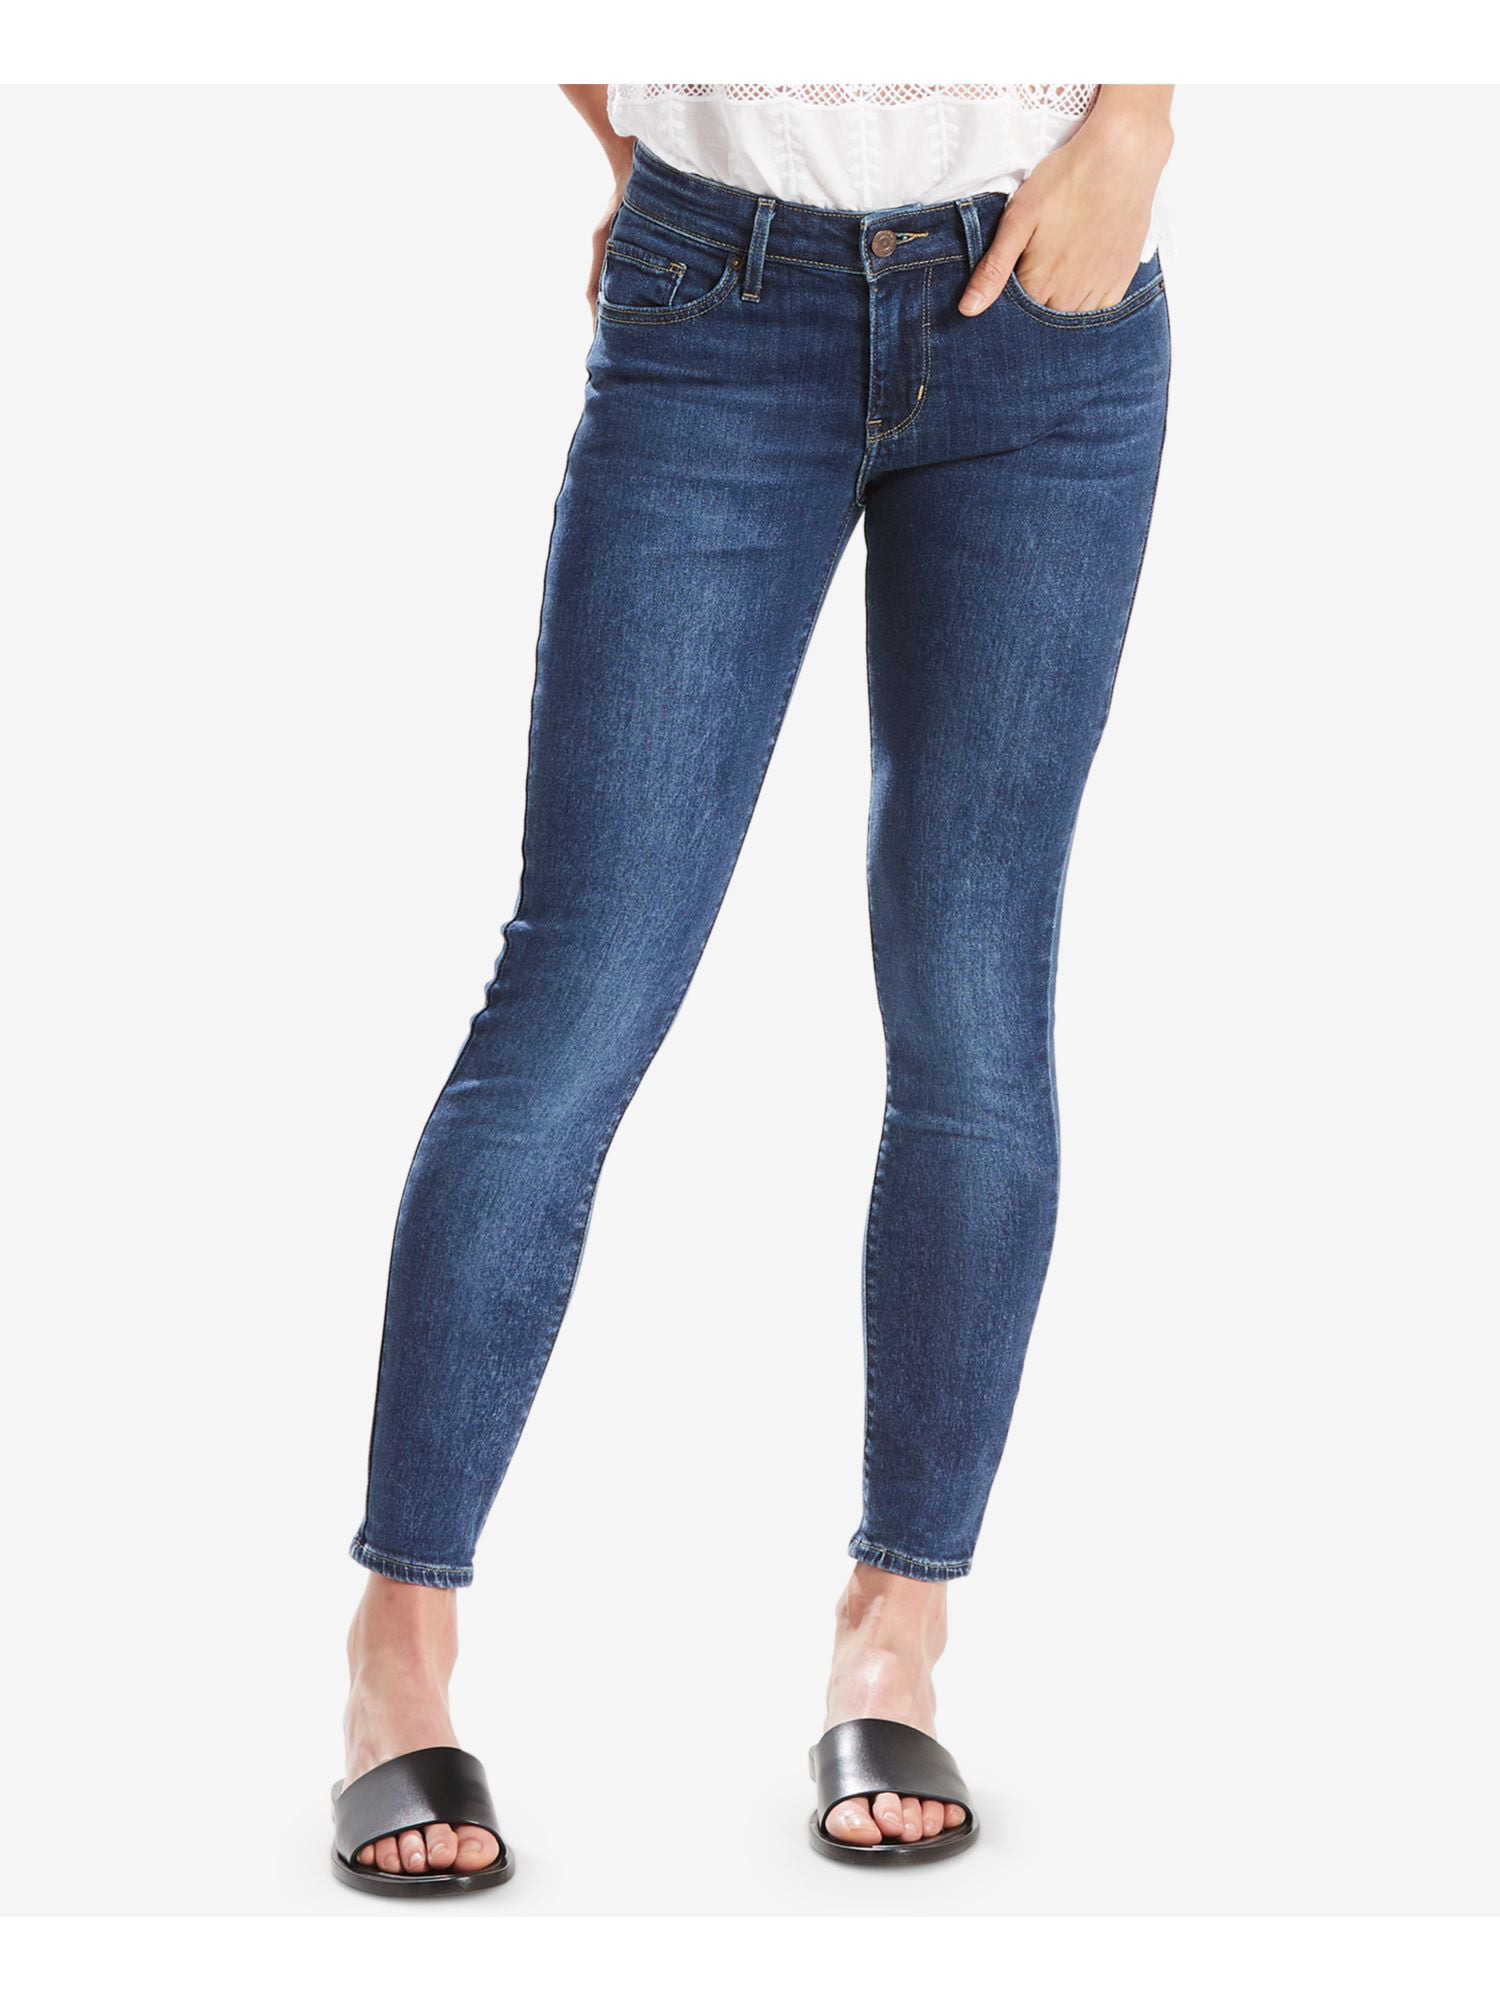 Levi's Women's 711 Skinny Ankle Jeans 